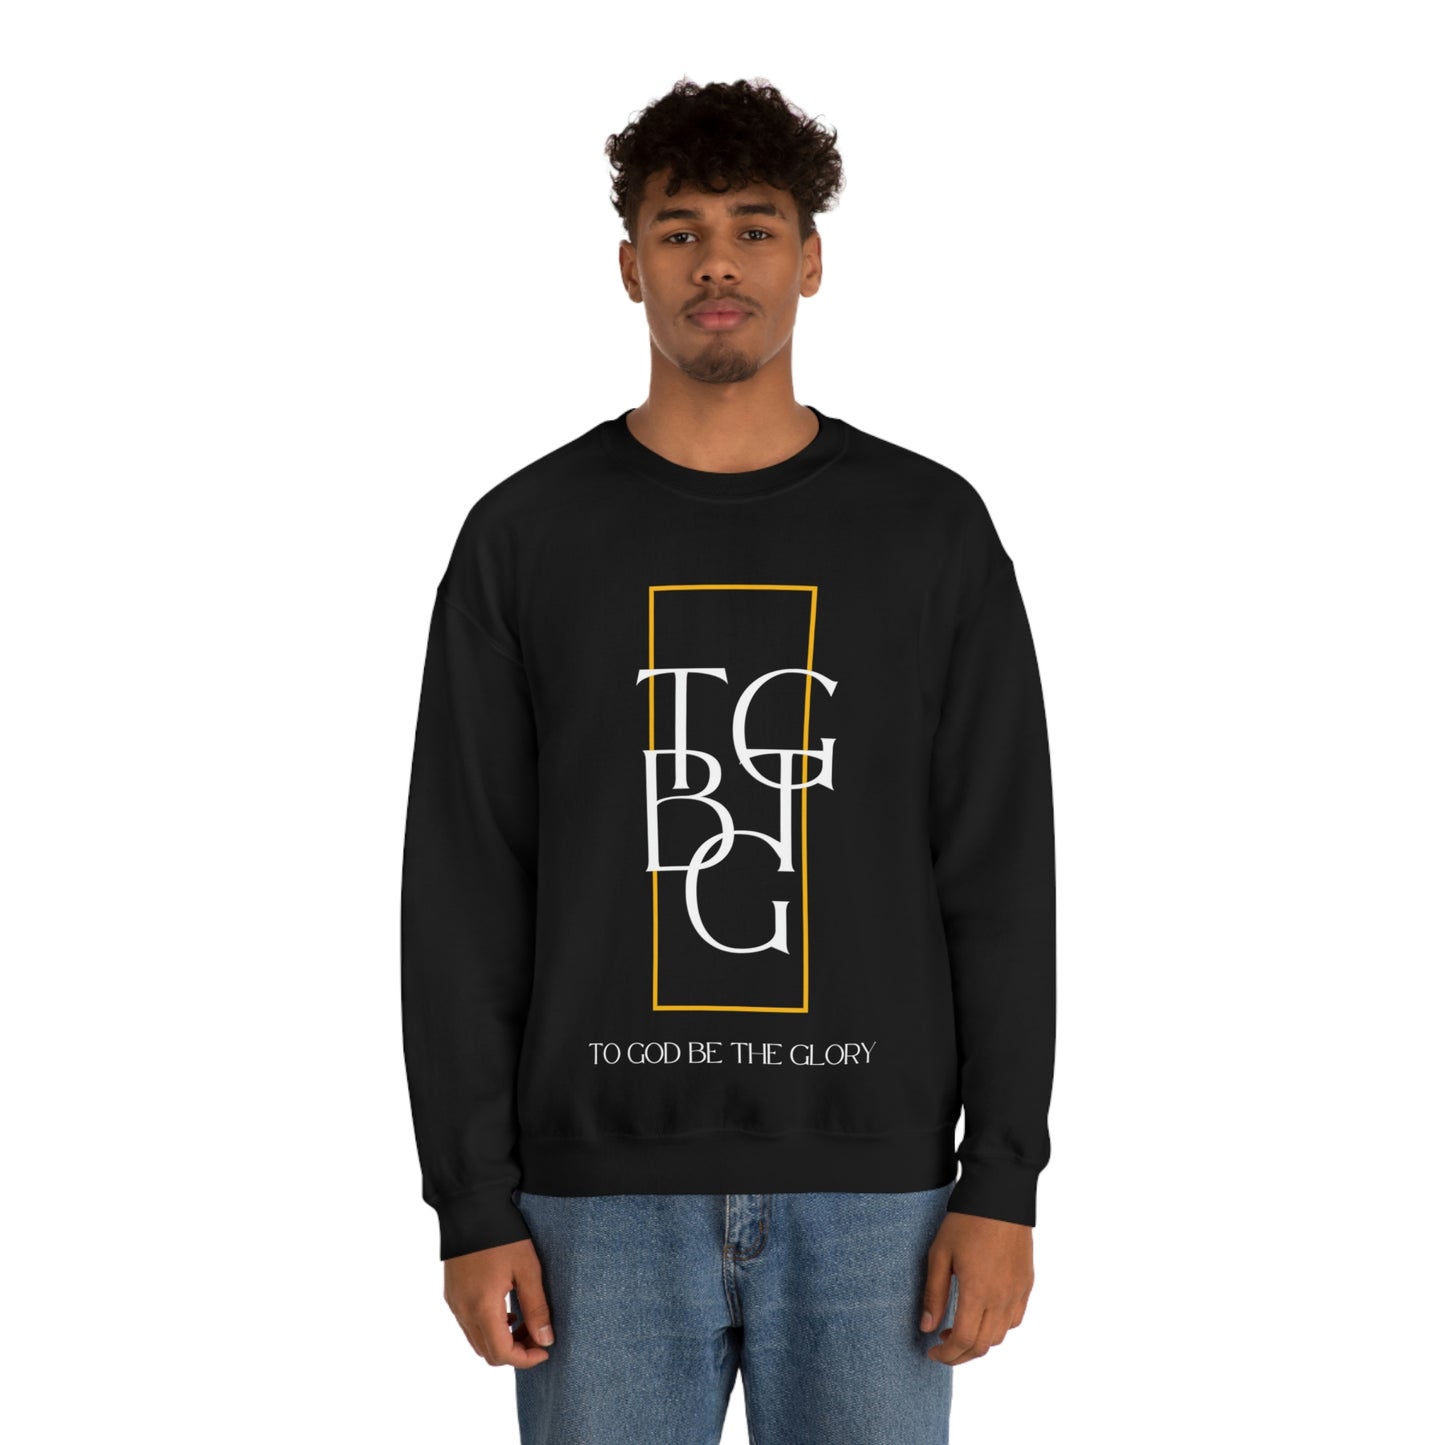 TGBTG Crewneck Sweatshirt in Black